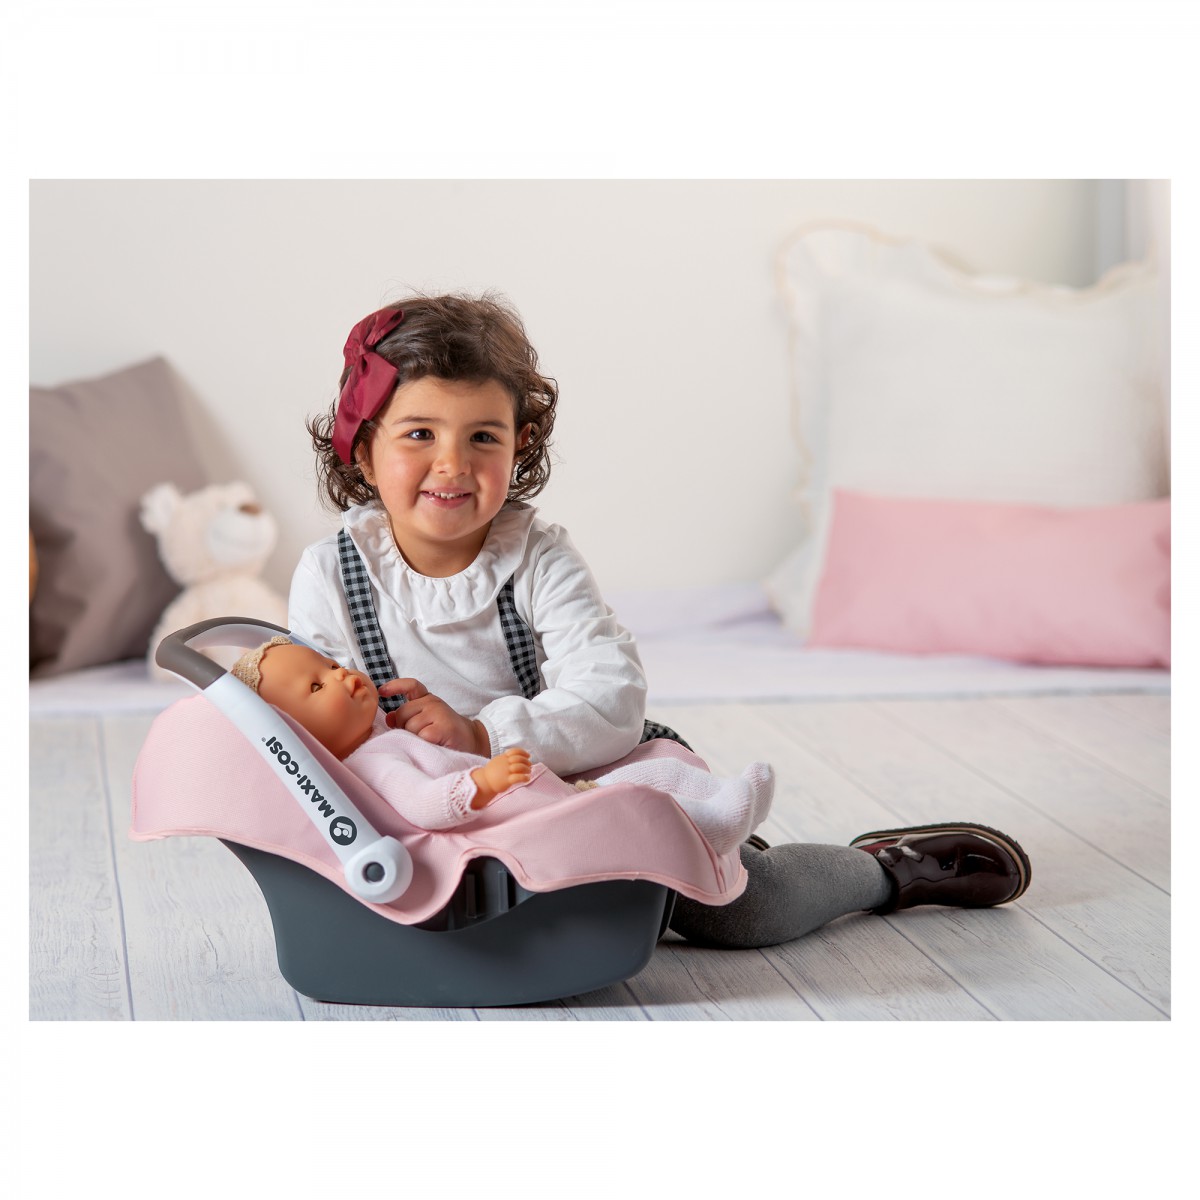 Smoby MaxiCosi Baby Doll Car Seat at Toys R Us UK